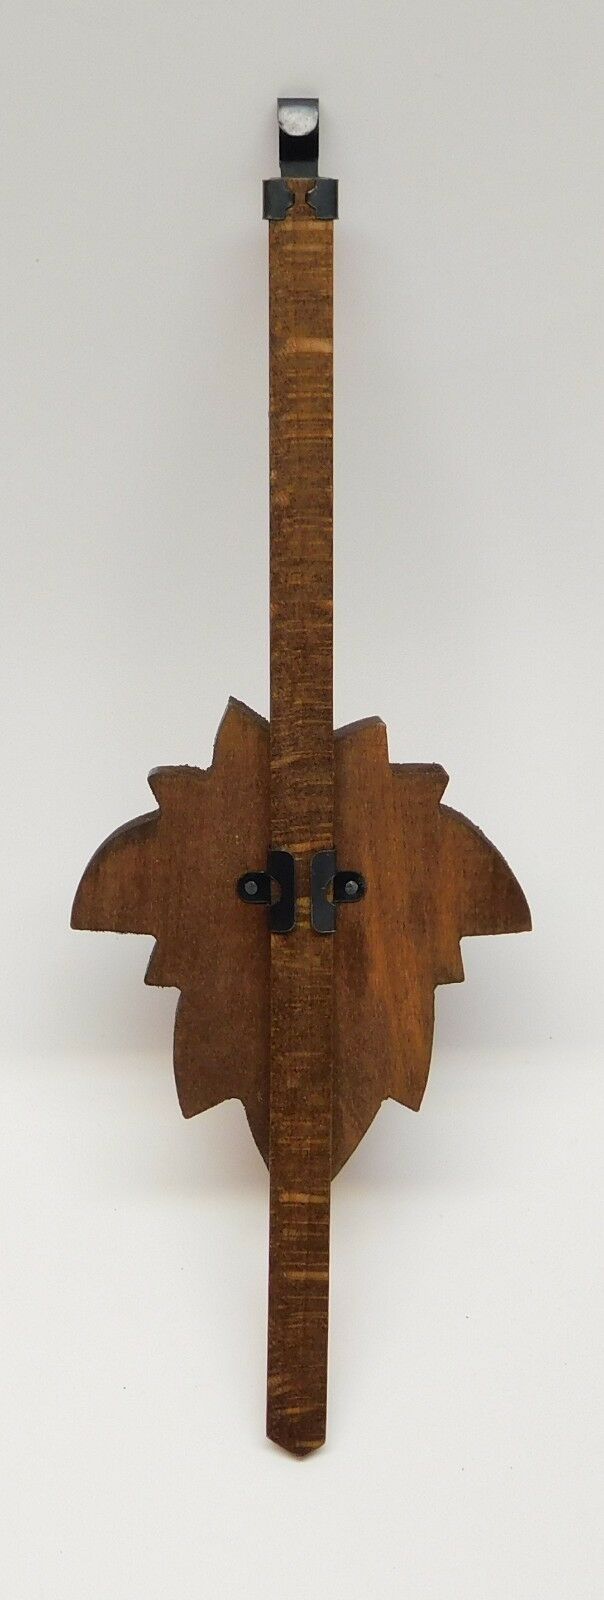 Cuckoo Clock Pendulum 3" Maple Leaf Style Brown German Made 8 3/4" Length